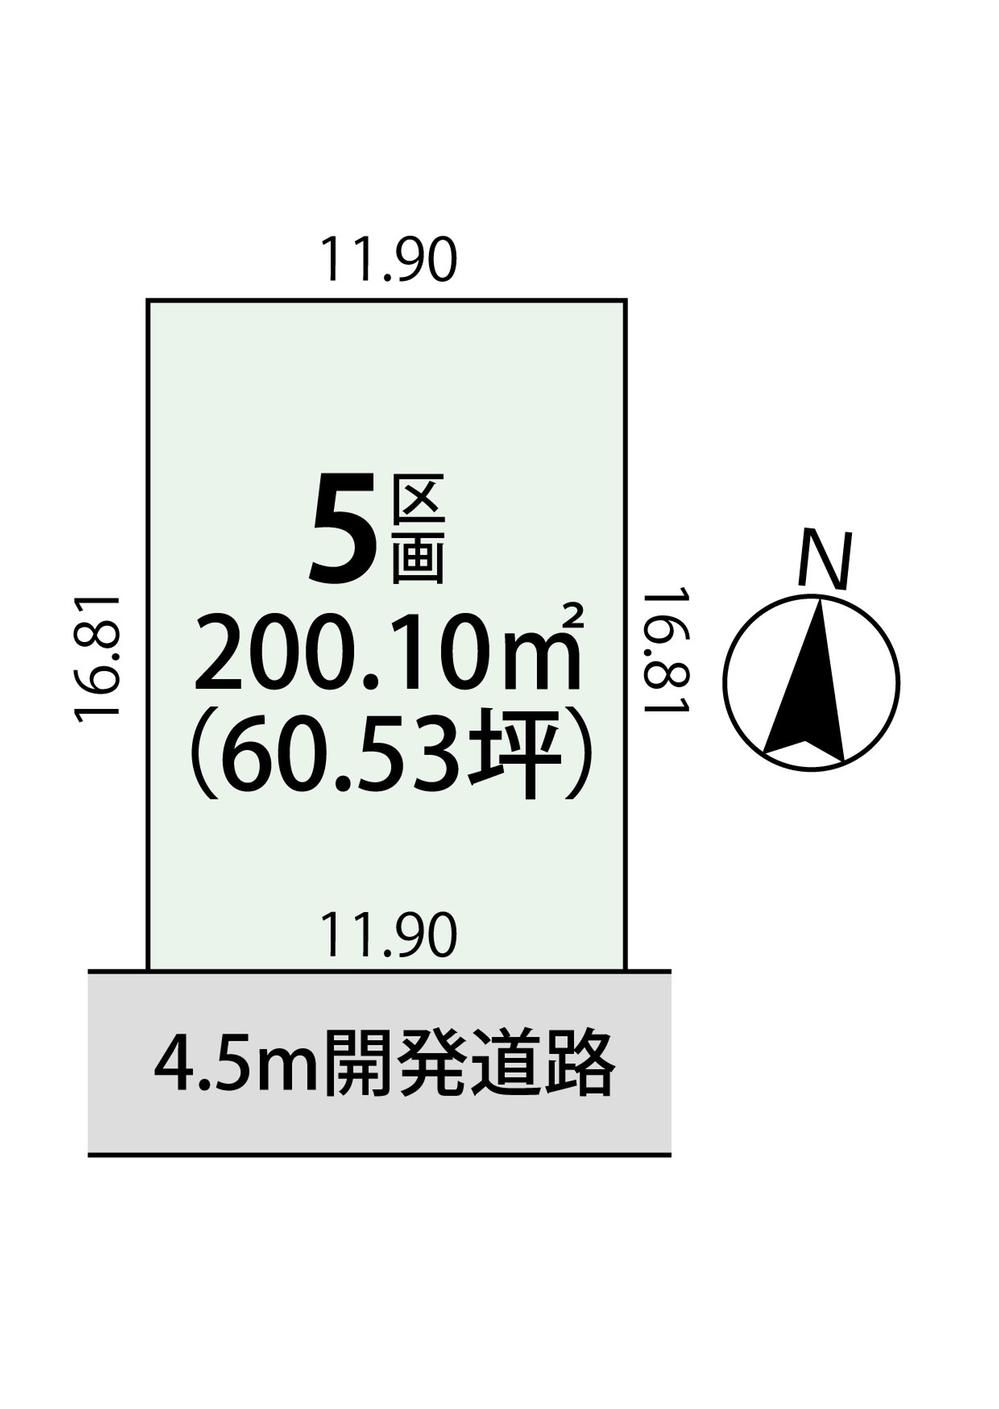 Compartment figure. Land price 16.5 million yen, It is a land area 200.1 sq m 5 compartment view